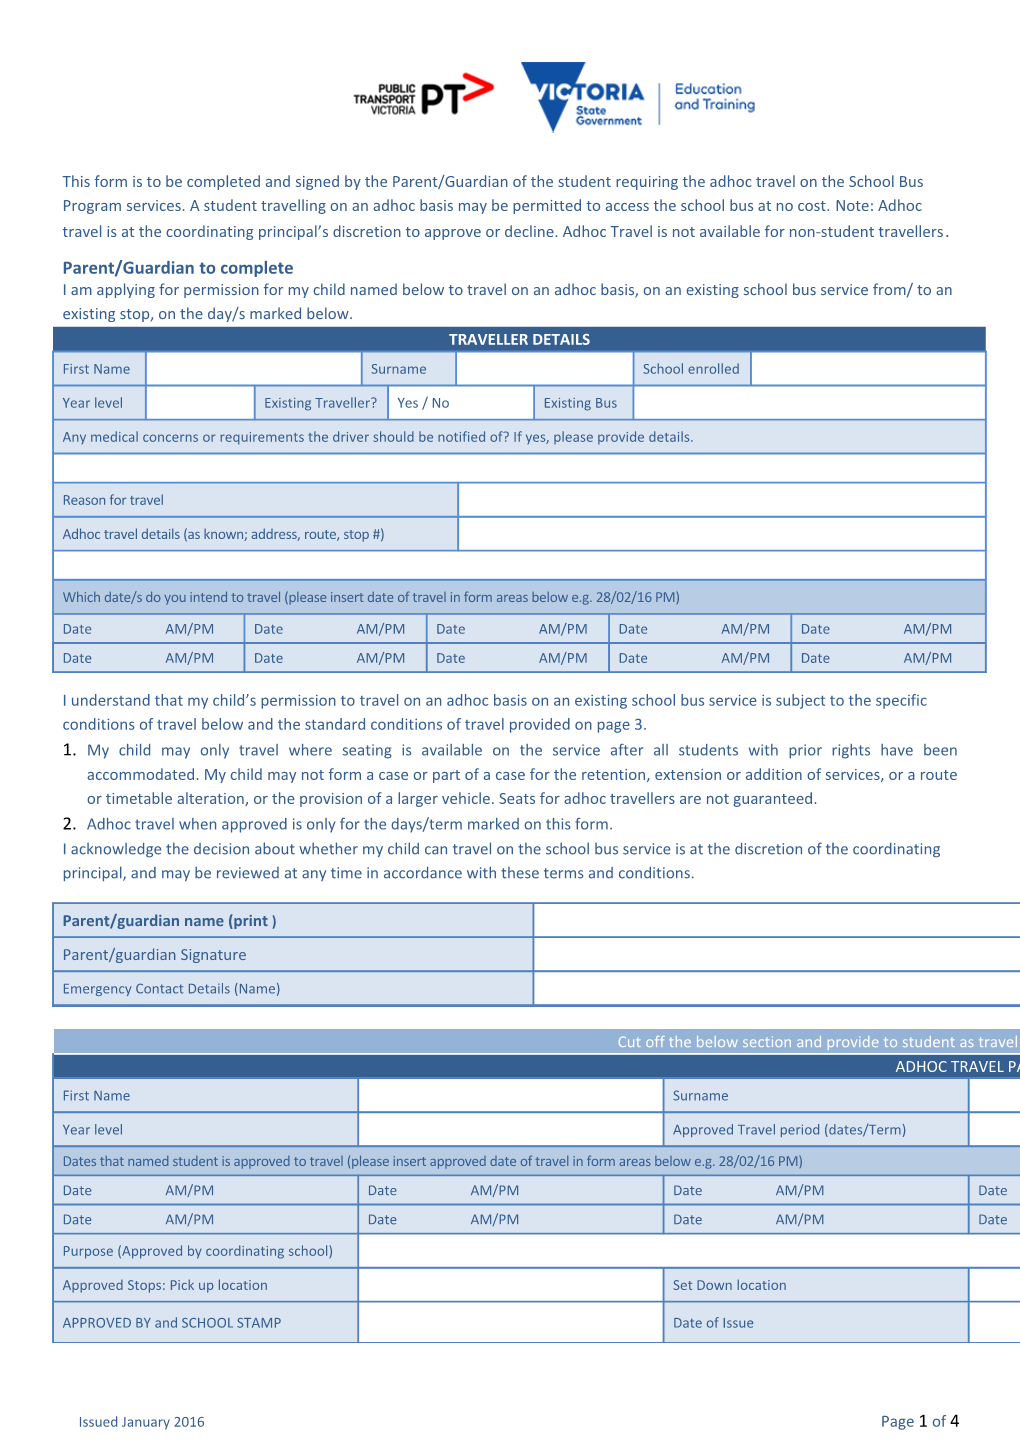 Form 10 - Application for Adhoc Travel